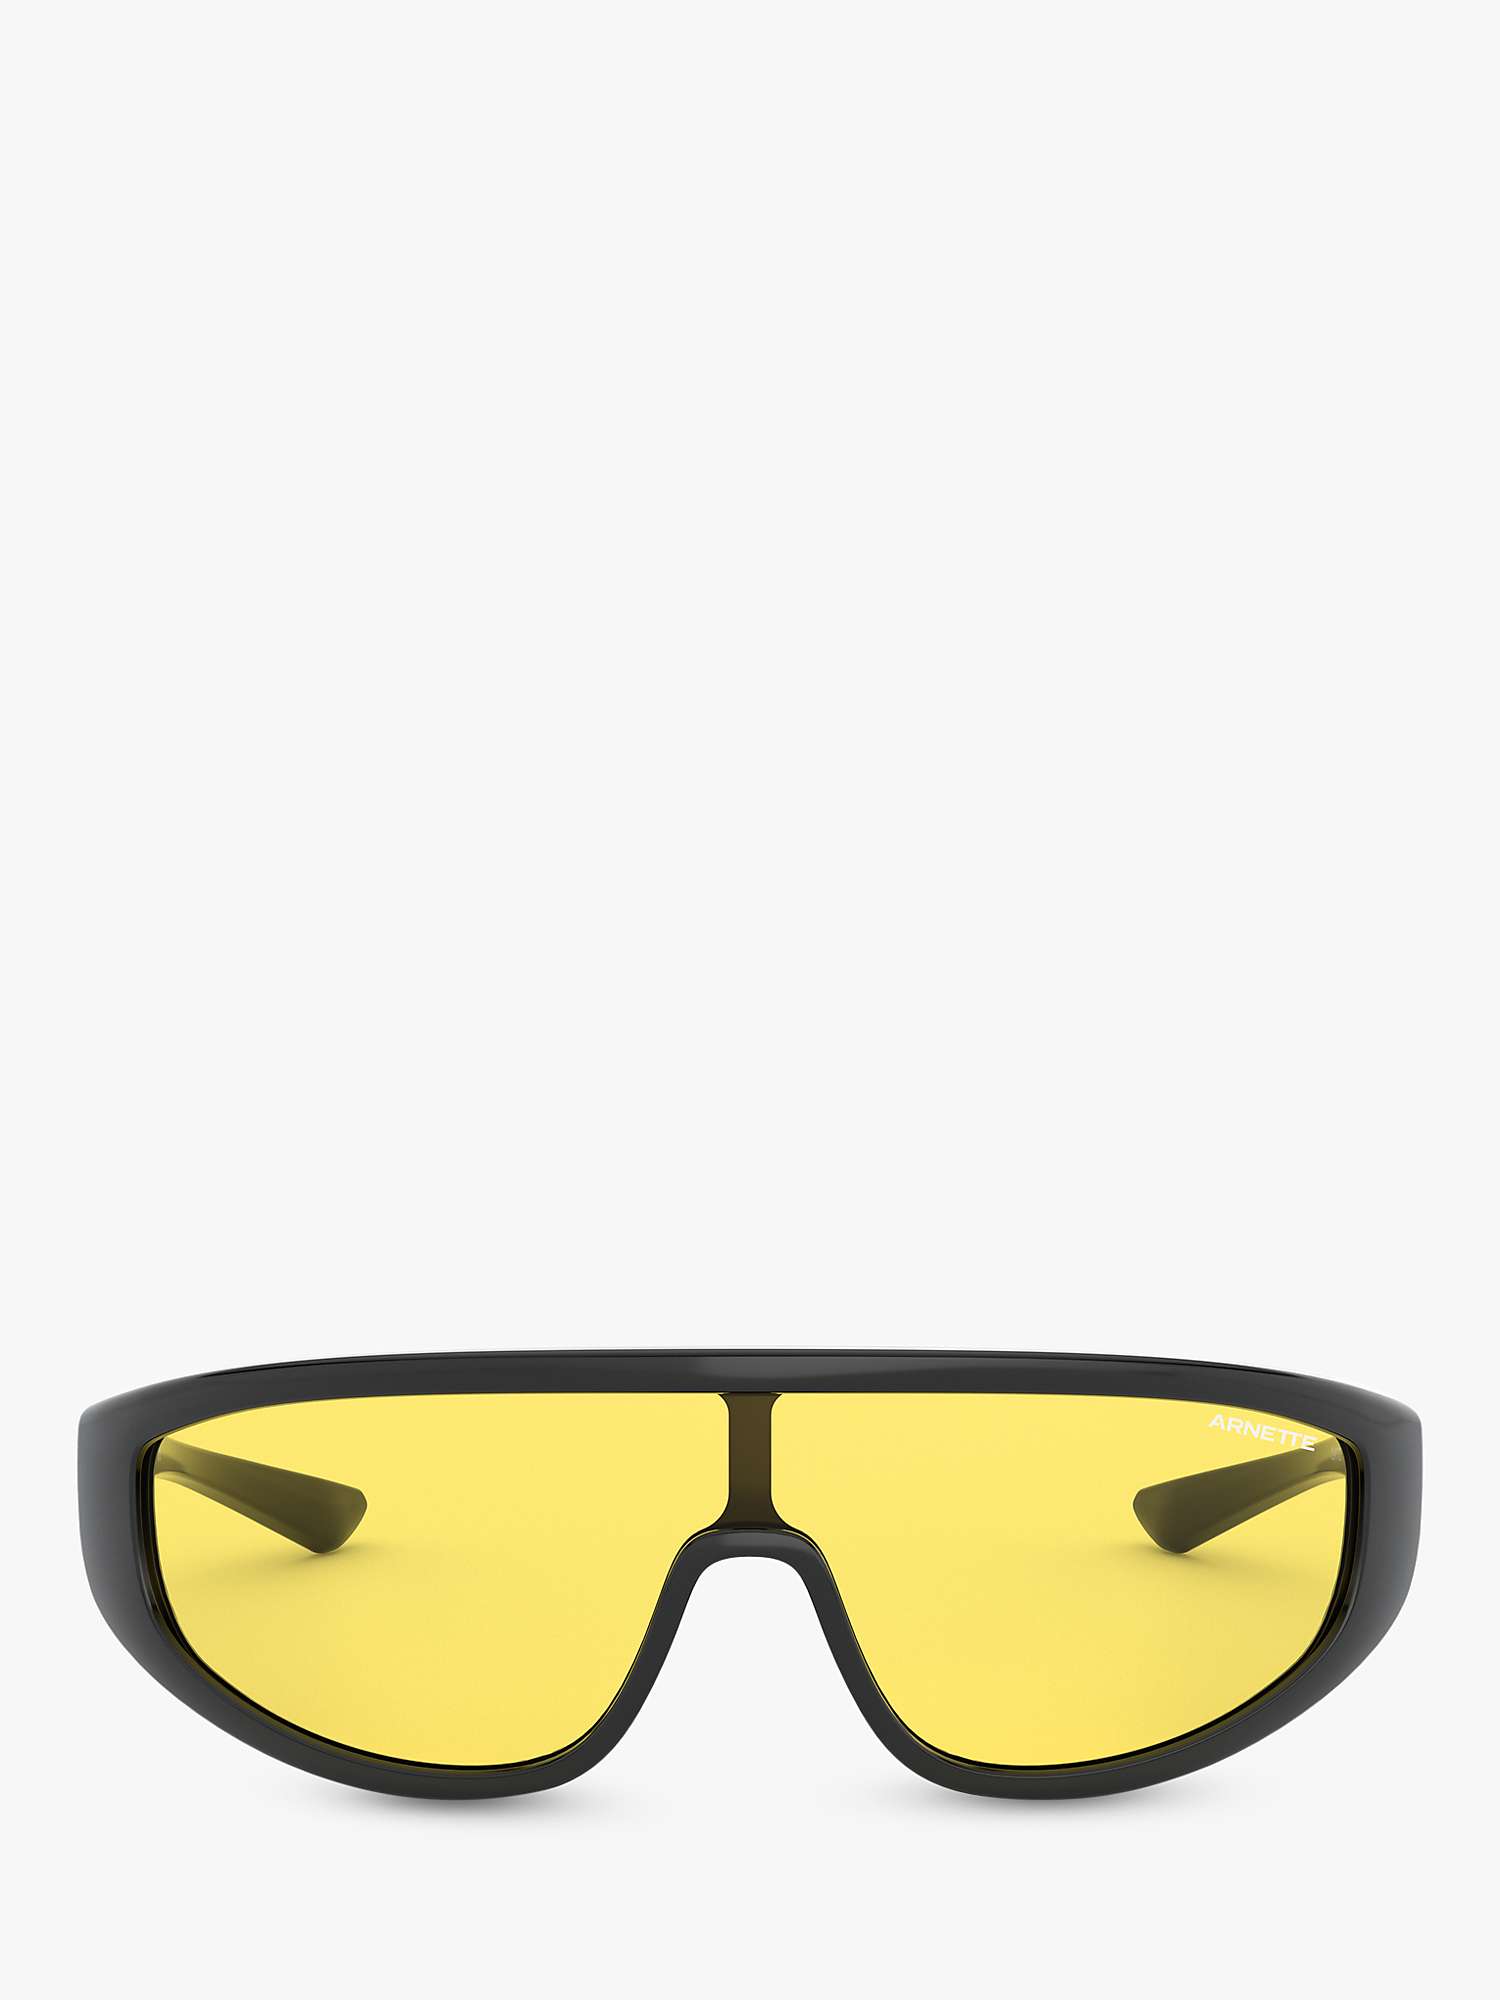 Buy Arnette AN4264 Men's Wrap Sunglasses, Matte Black/Yellow Online at johnlewis.com